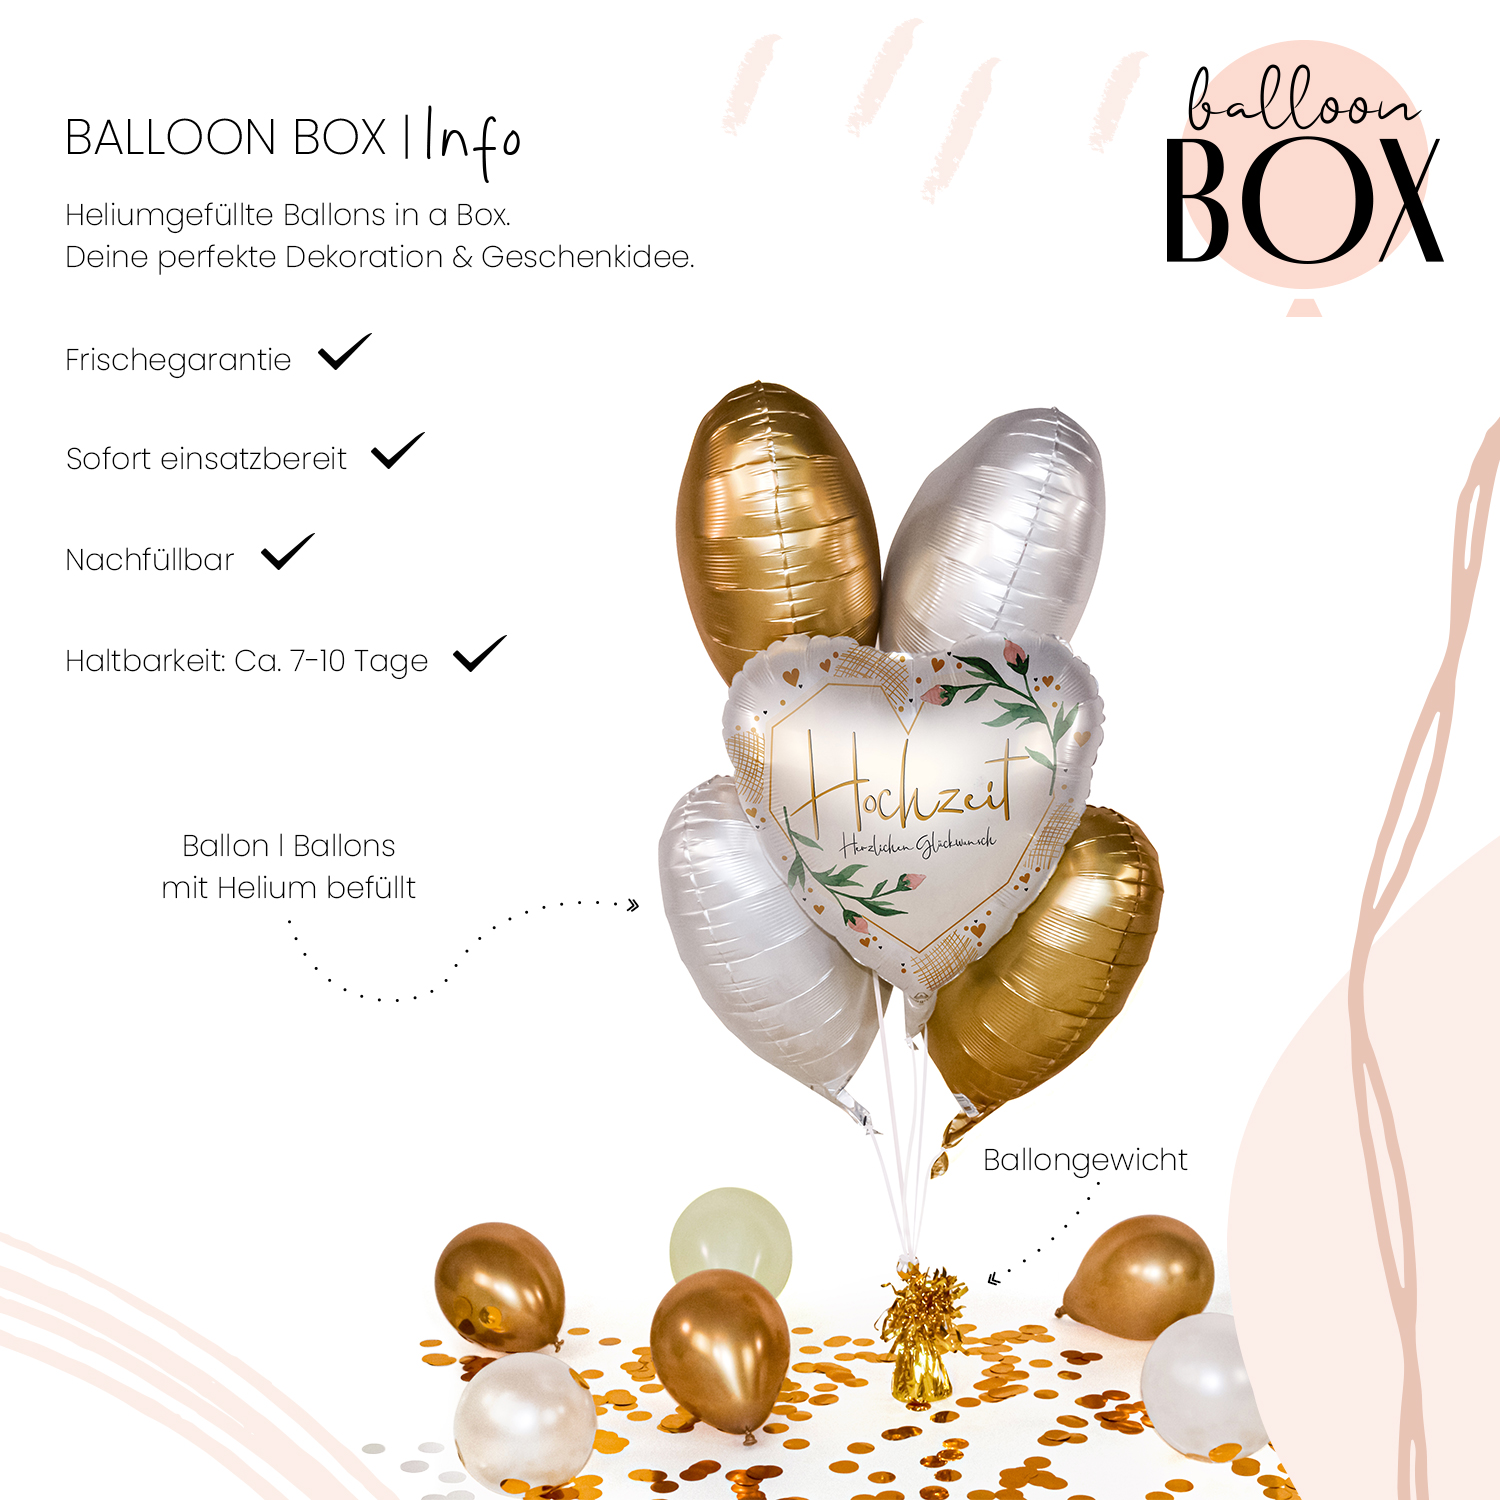 Heliumballon in a Box - Hochzeit